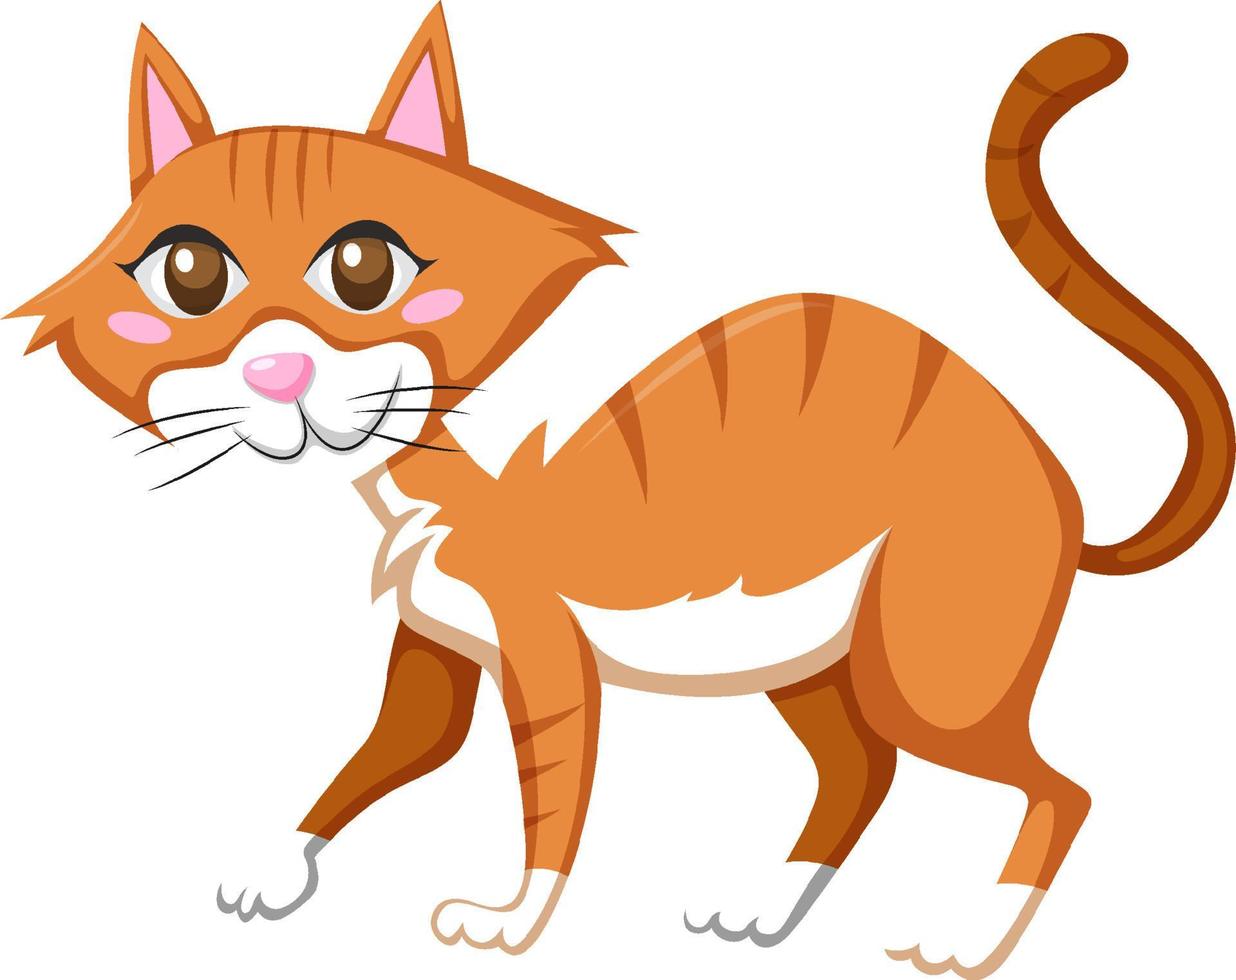 Orange cat in cartoon style vector